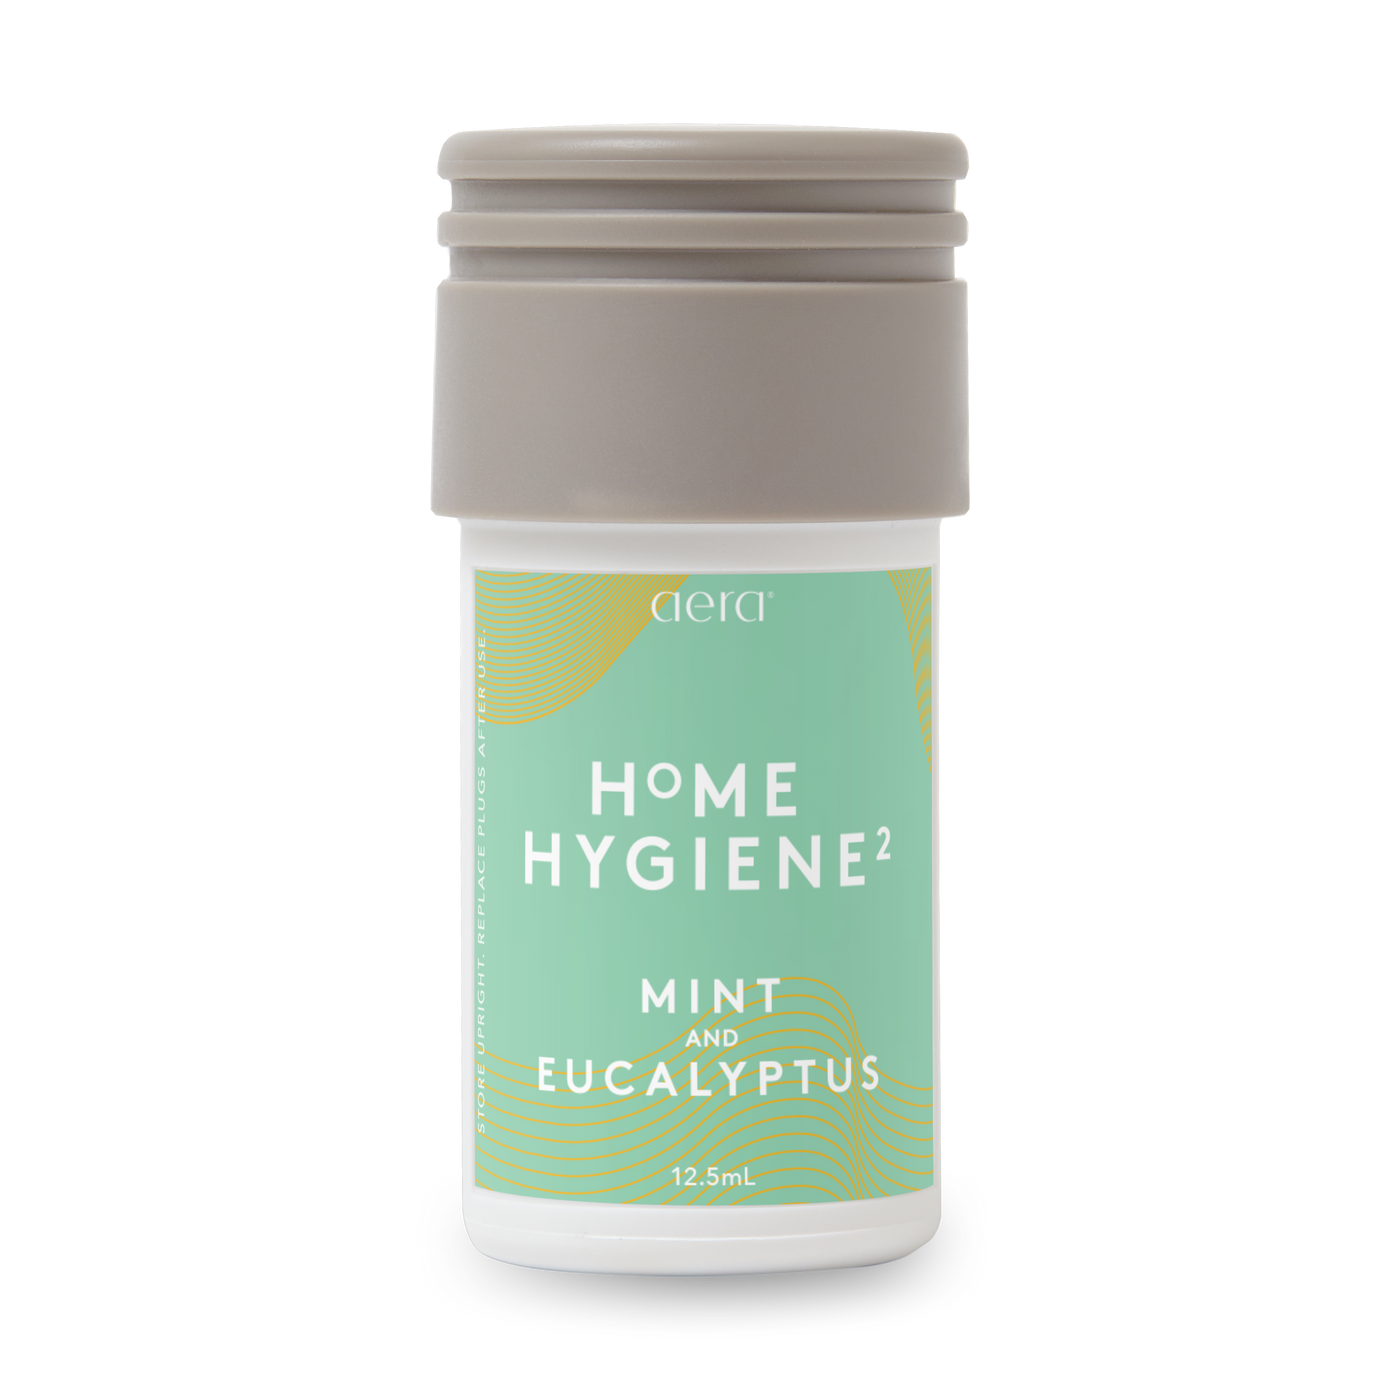 Home Hygiene Mint and Eucalyptus Mini